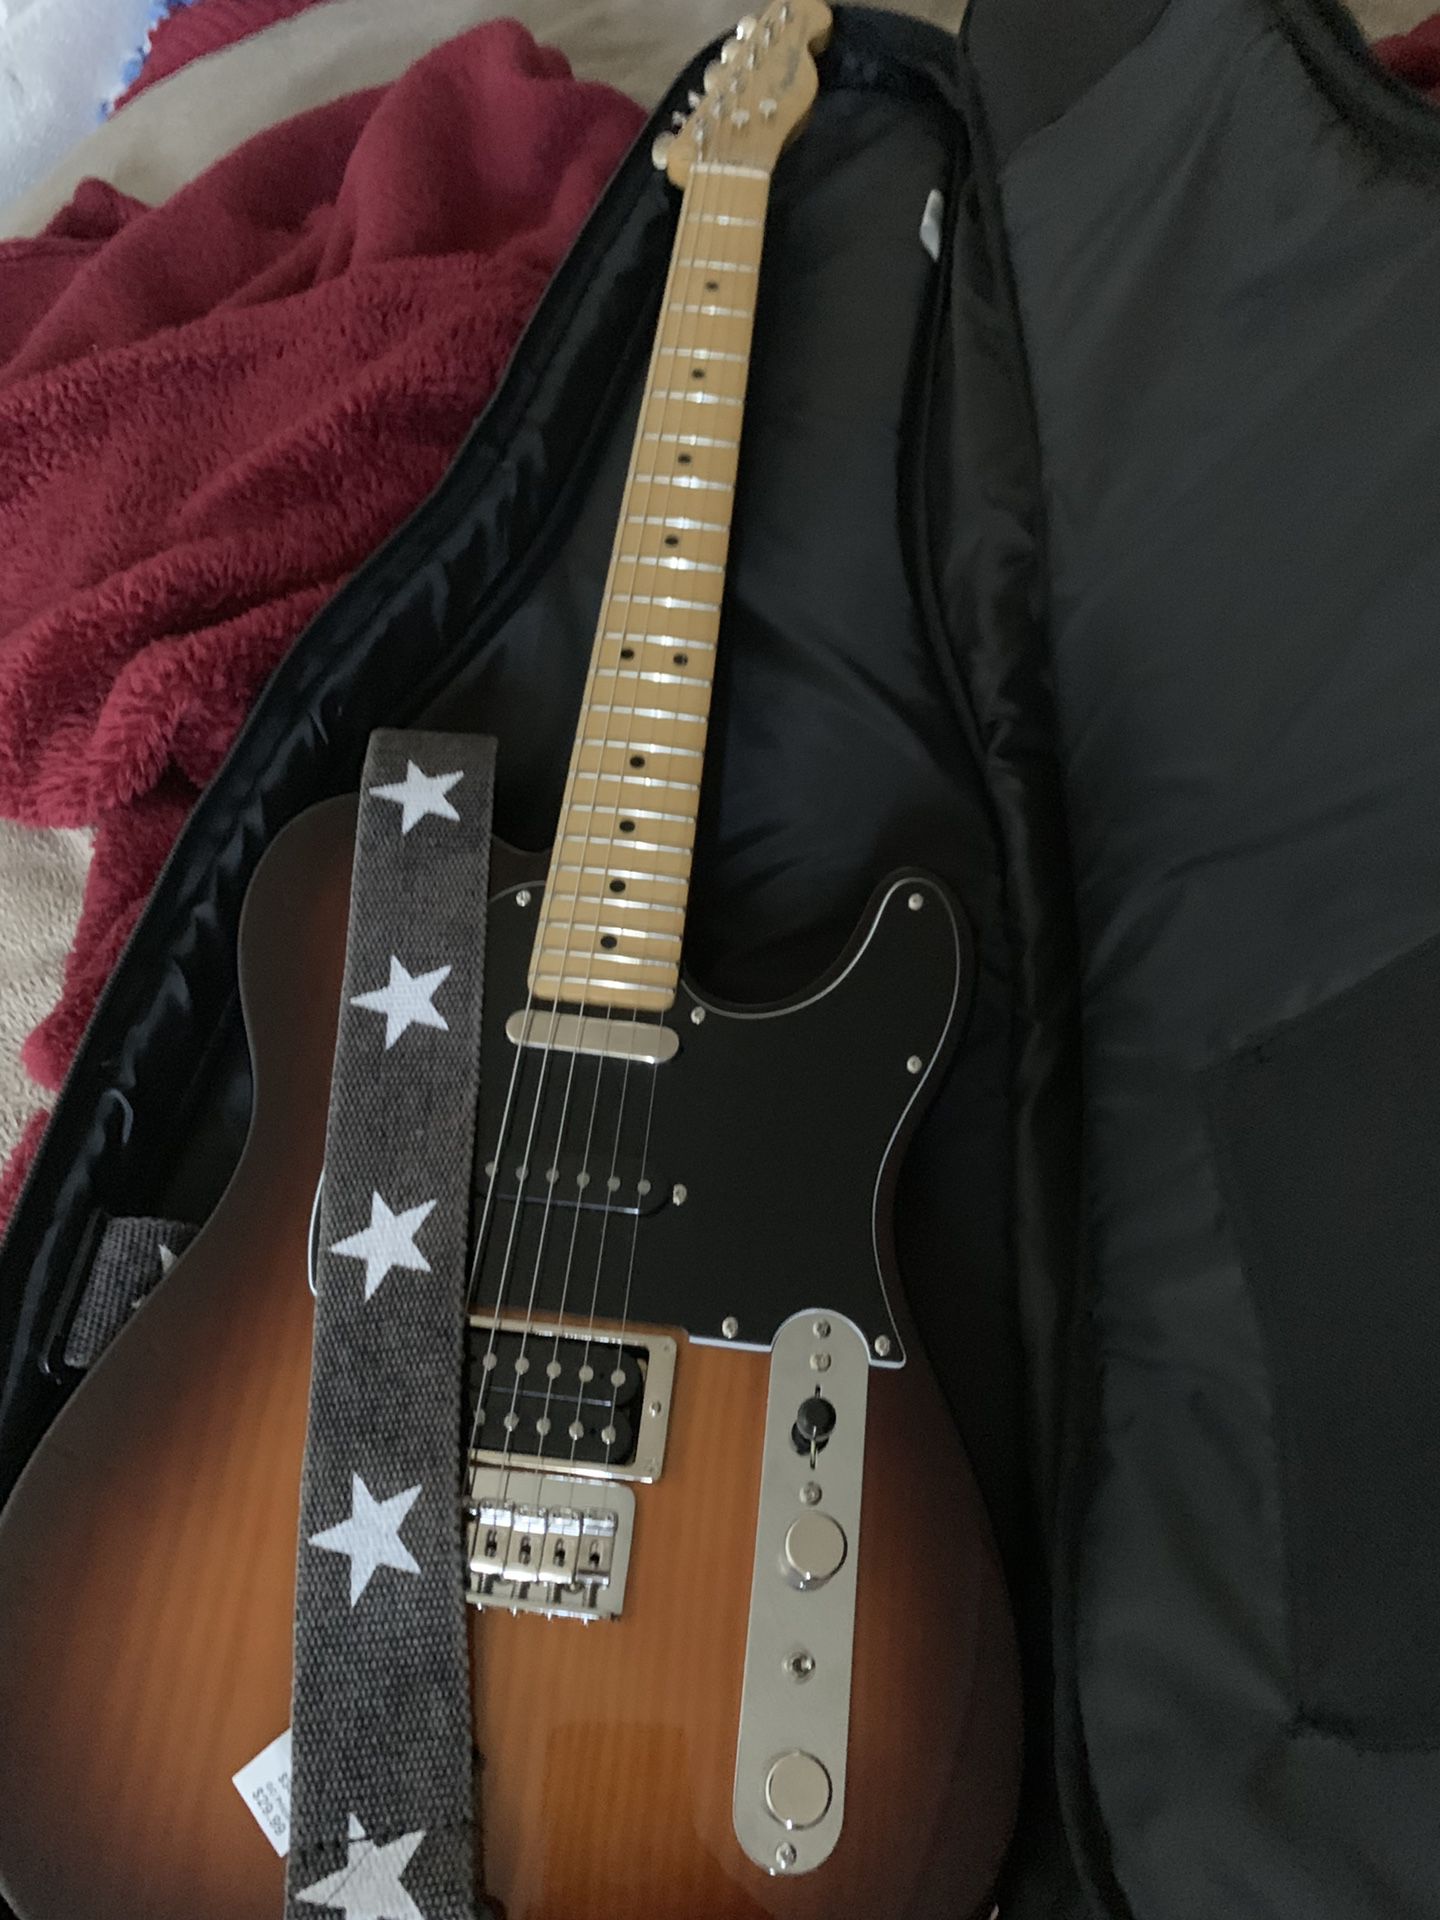 Fender guitar and amp.